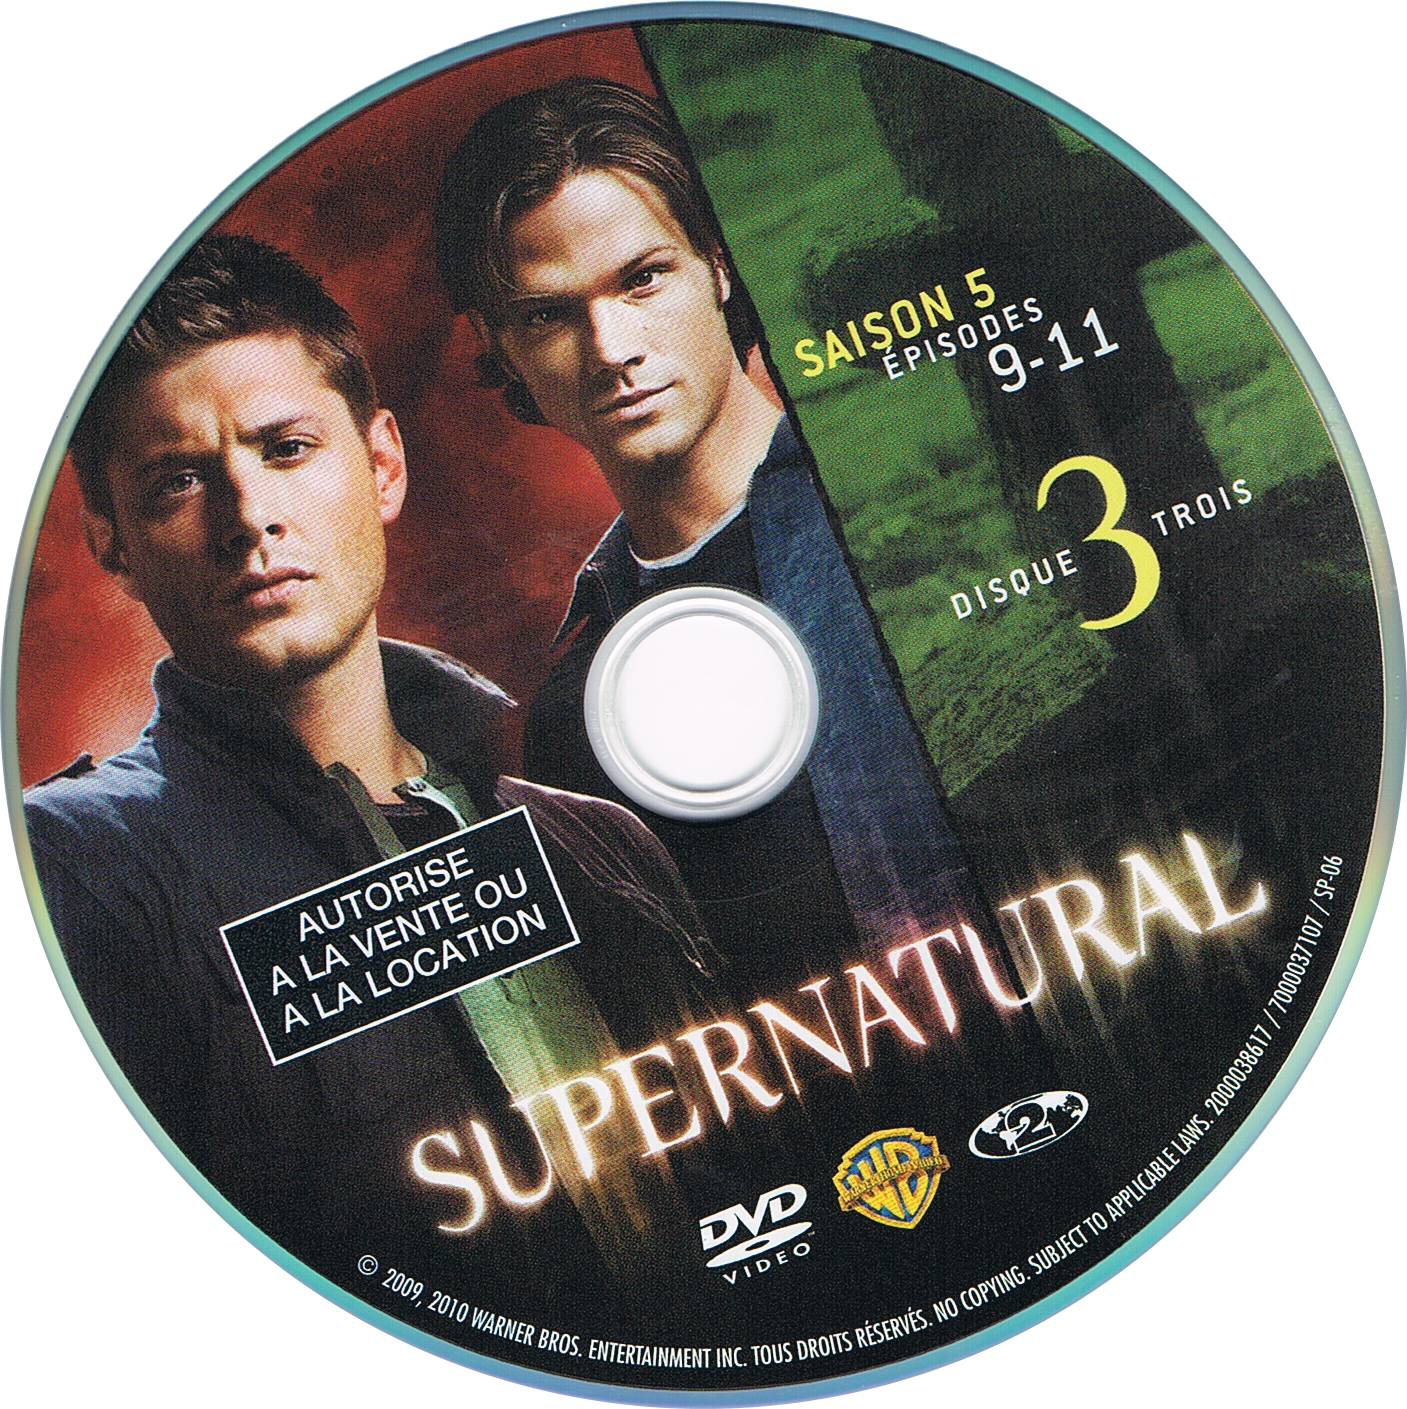 Supernatural Saison 5 DISC 3